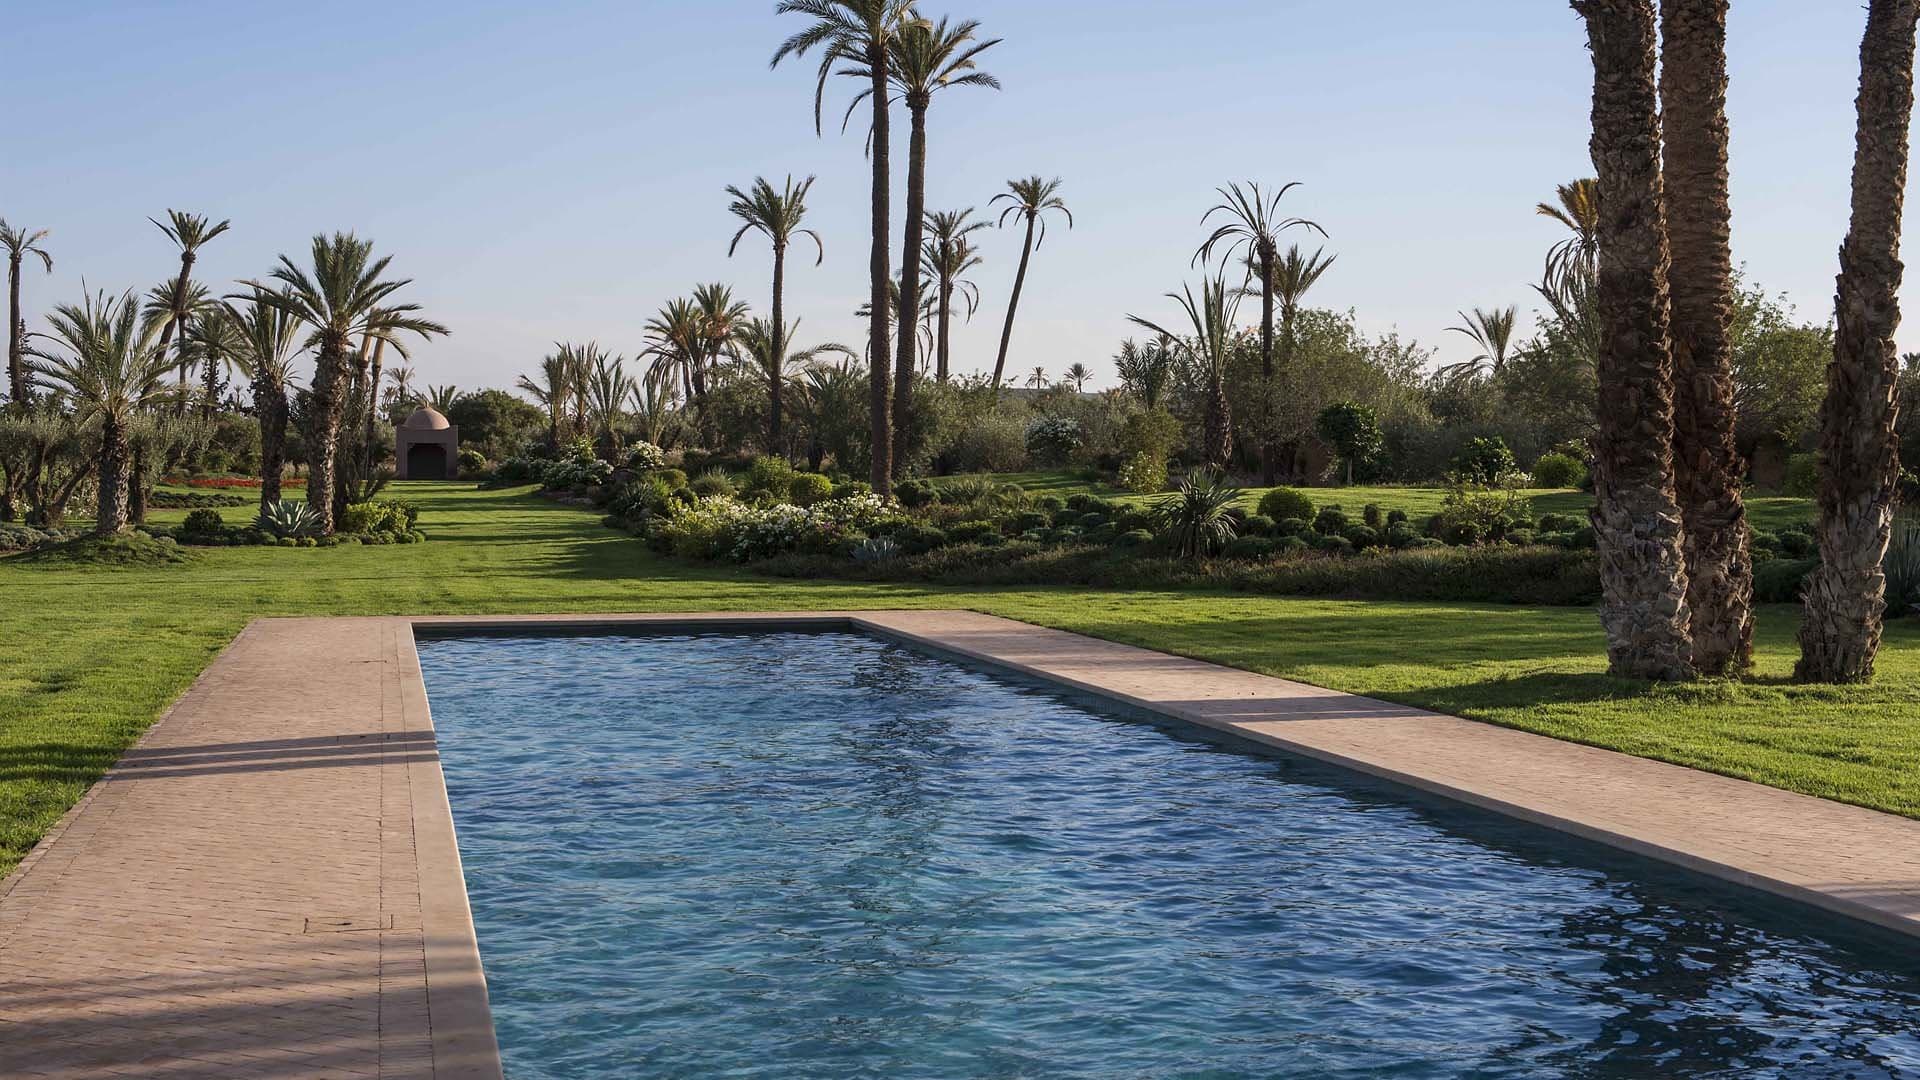 10 Bedroom Villa For Sale Marrakech Lp08720 175514cdb61de900.jpg